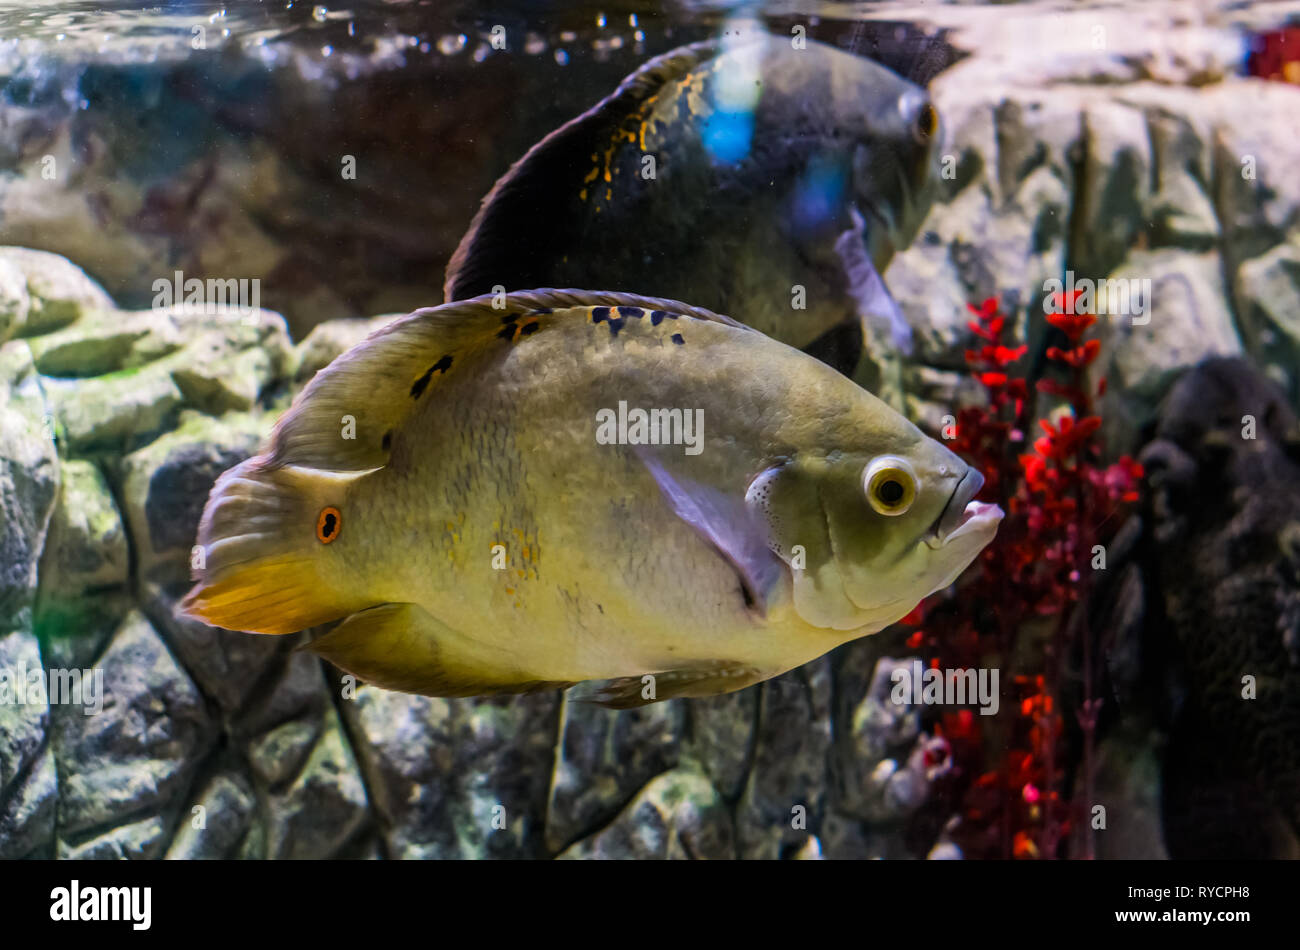 oscar cichlid color mutation, popular aquarium pet, tropical fish from the amazon basin of south America Stock Photo